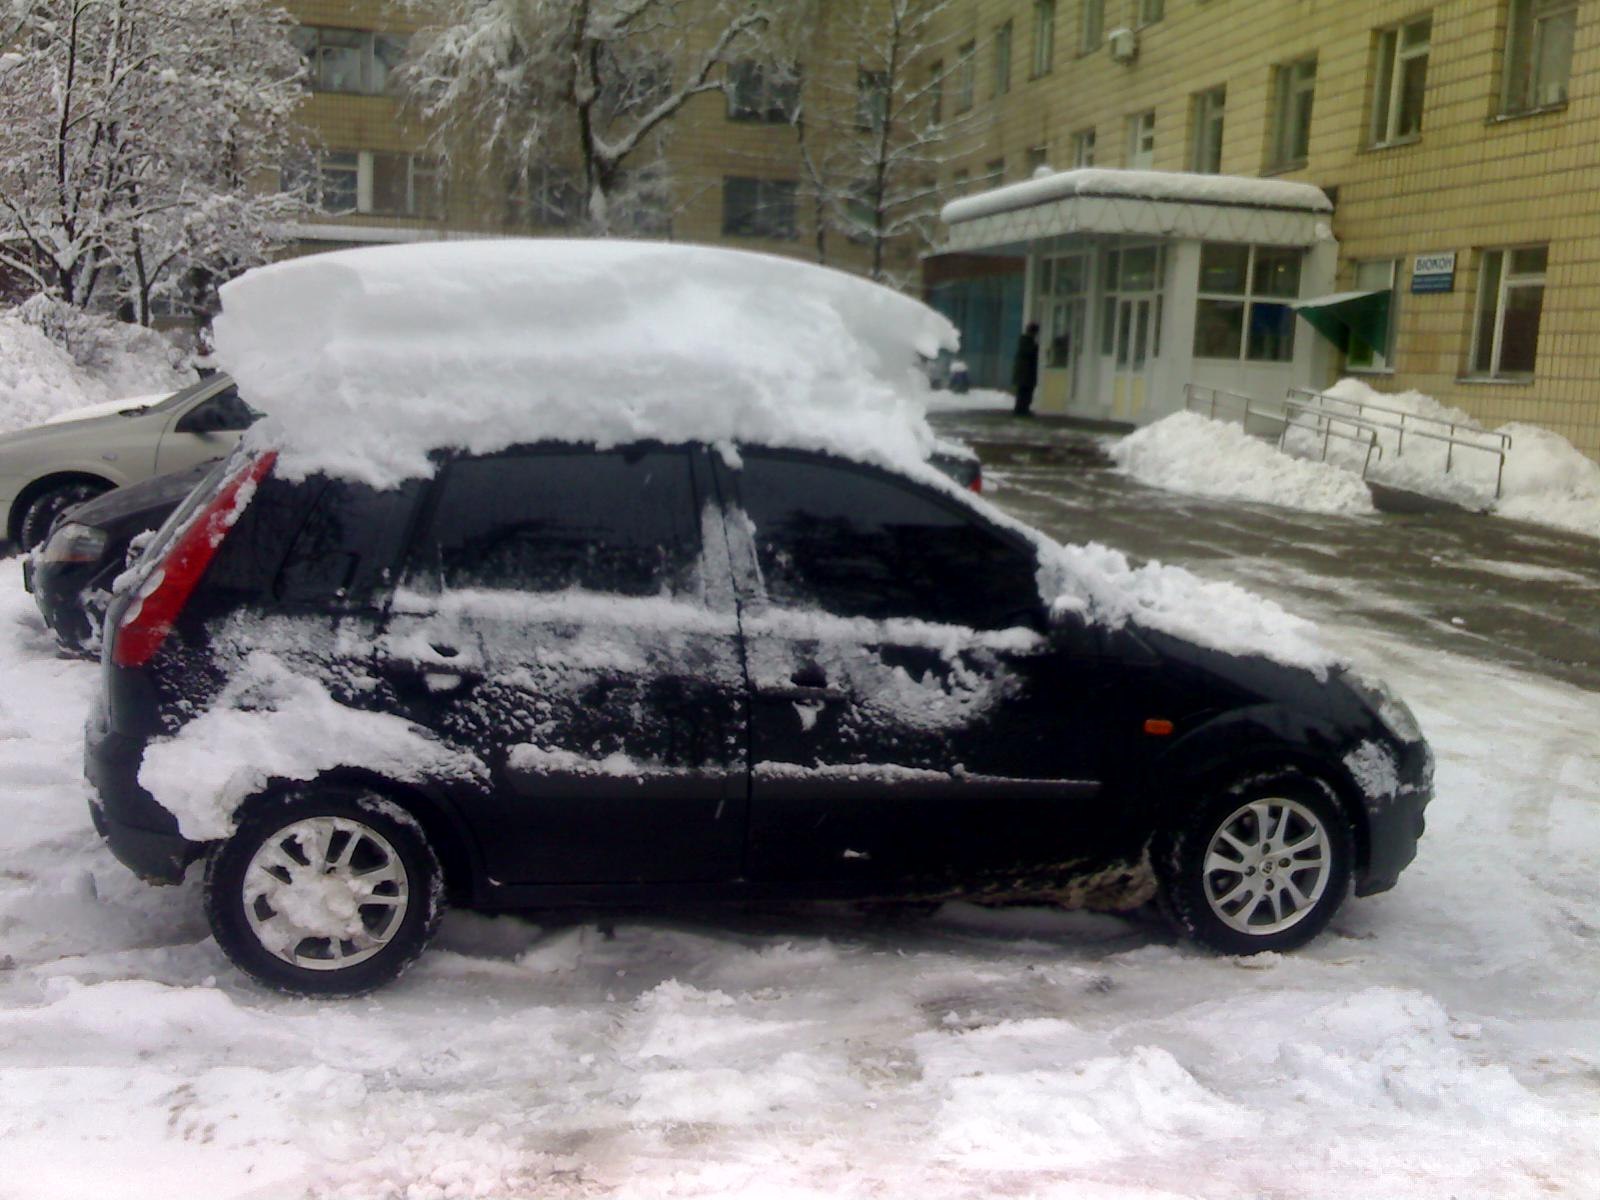 hellish car - My, Auto, Winter, Snow